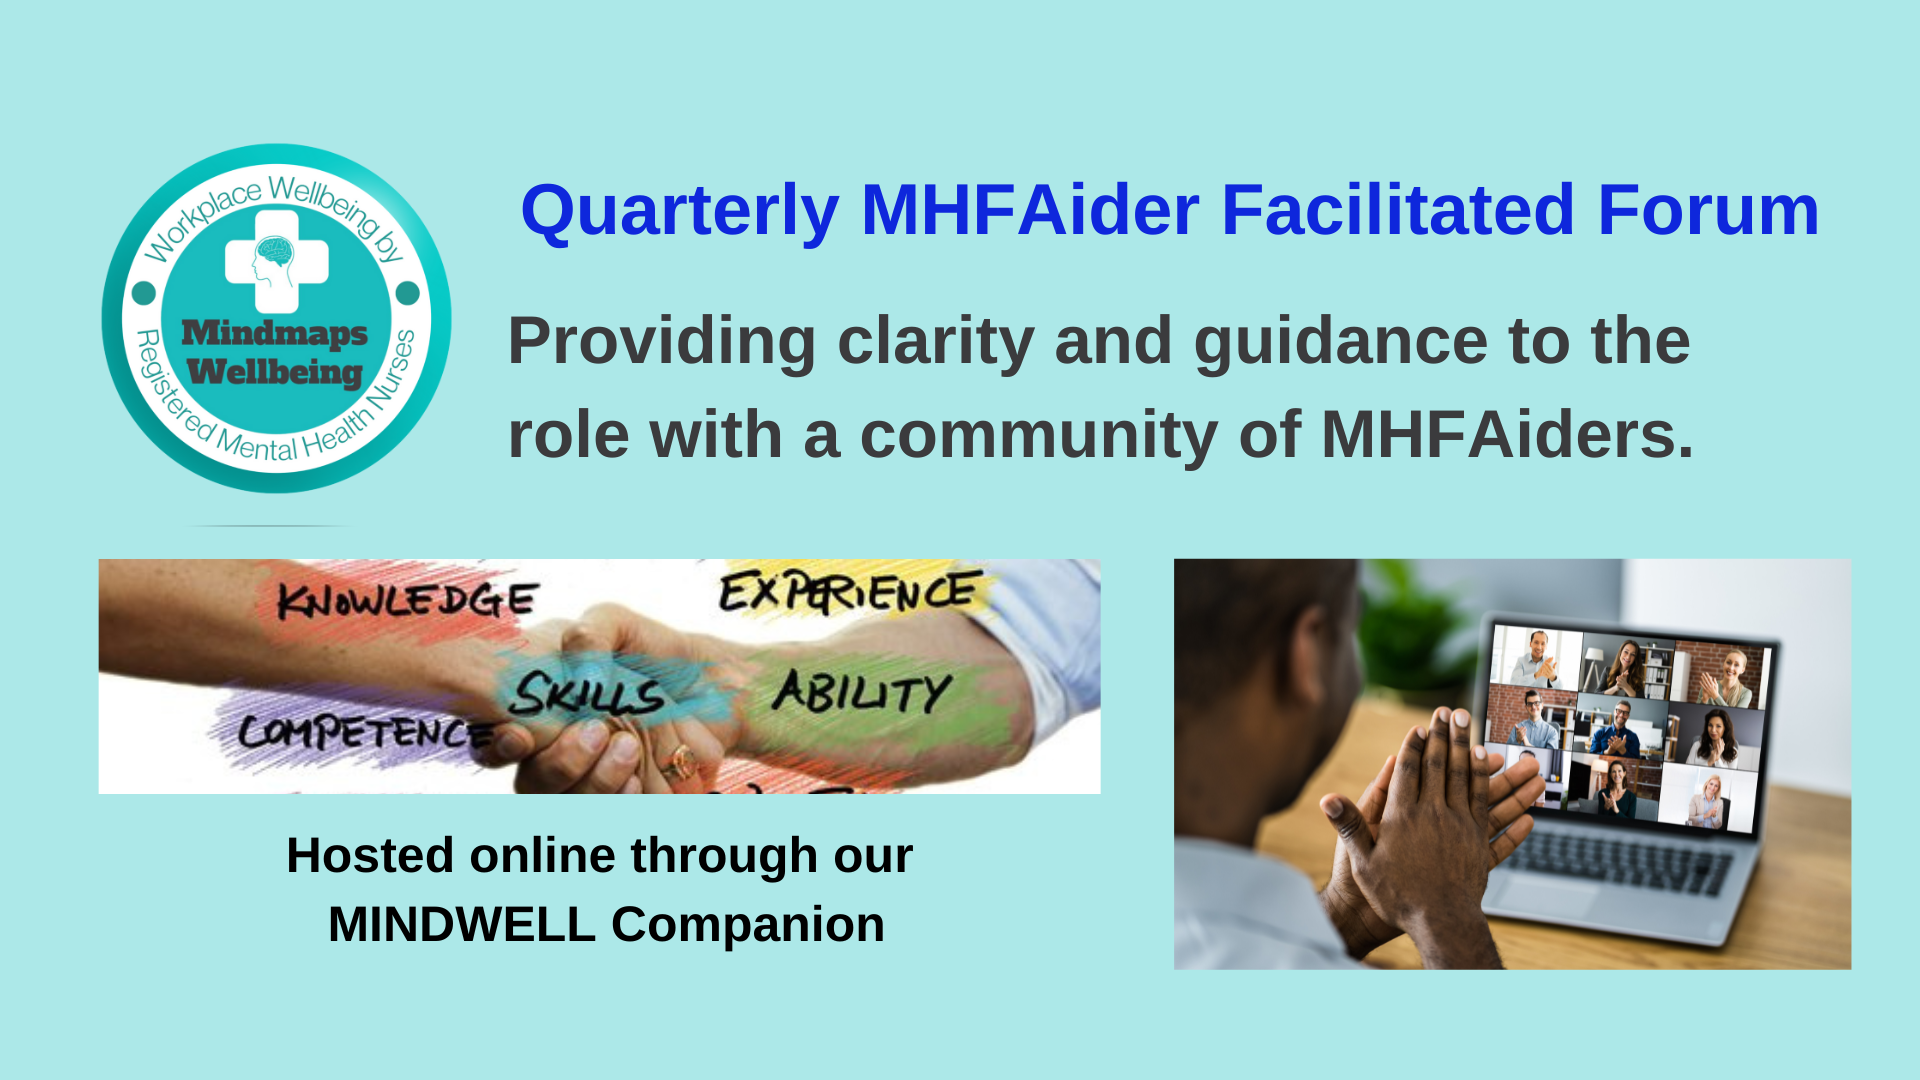 Quarterly Mental health First Aider Facilitated Forum